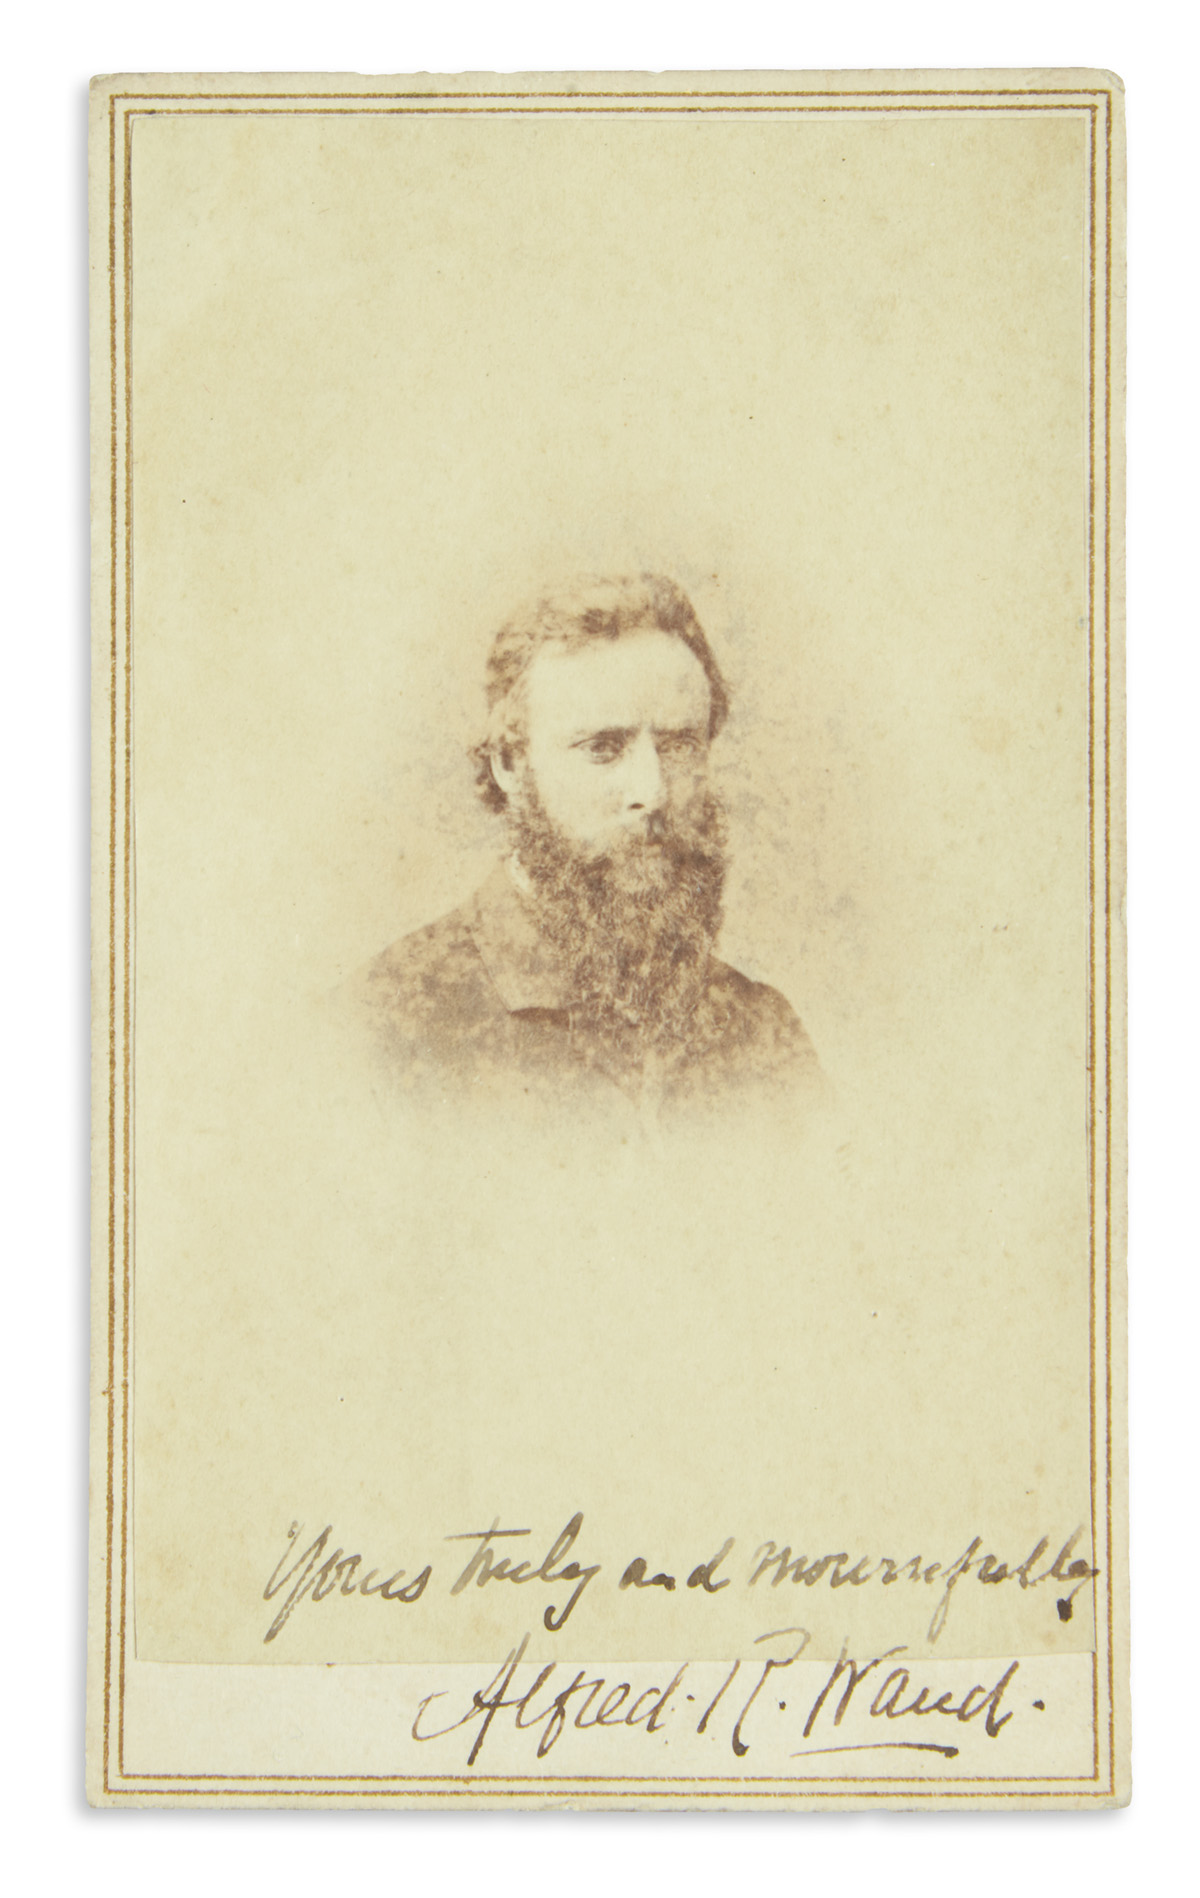 (CIVIL WAR--ART.) Waud, Alfred R. Signed and inscribed carte-de-visite of the great Civil War sketch artist.